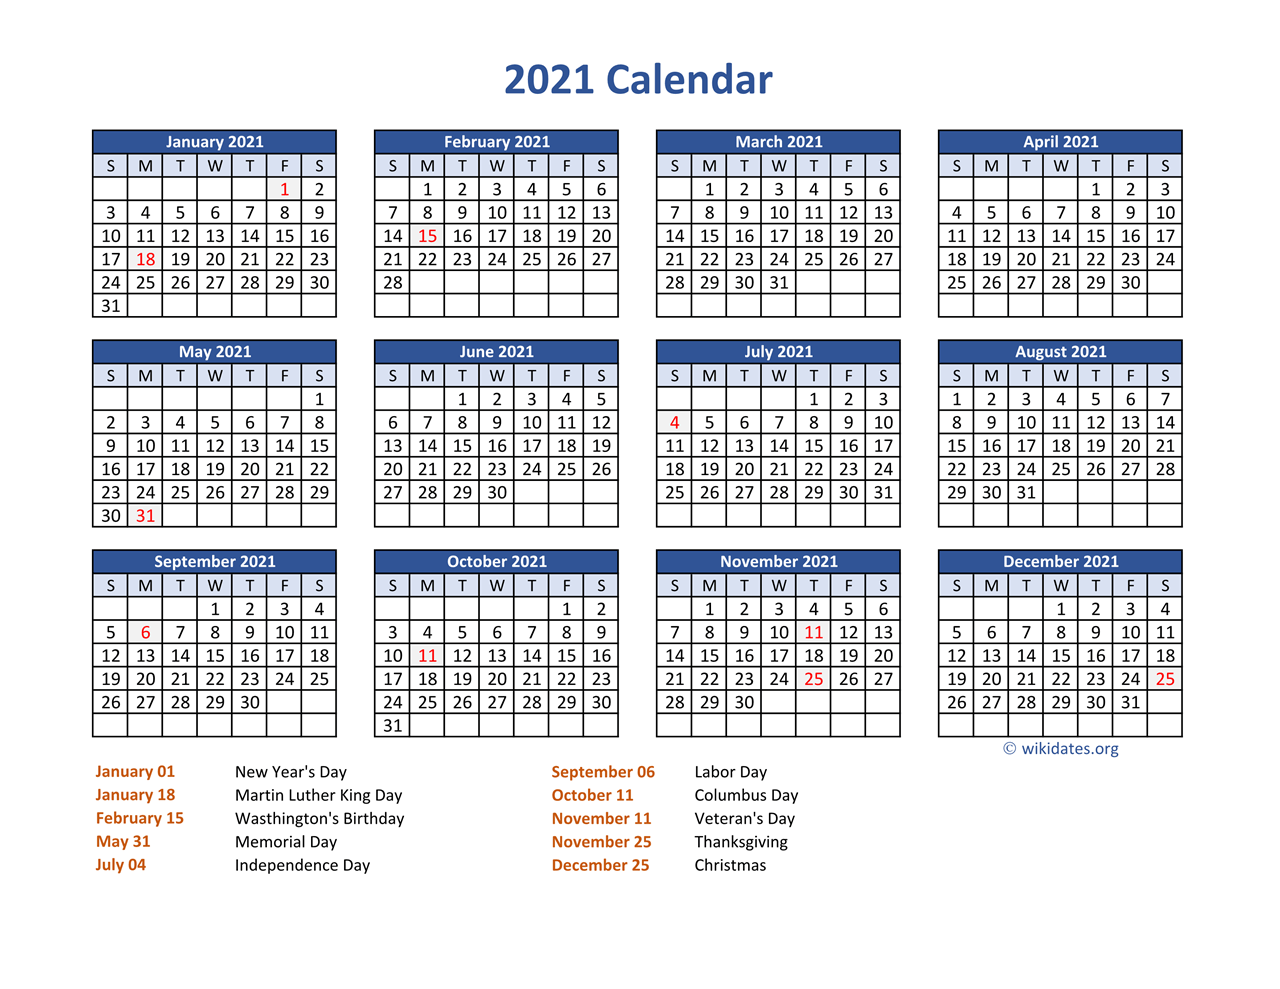 pdf-calendar-2021-with-federal-holidays-wikidates